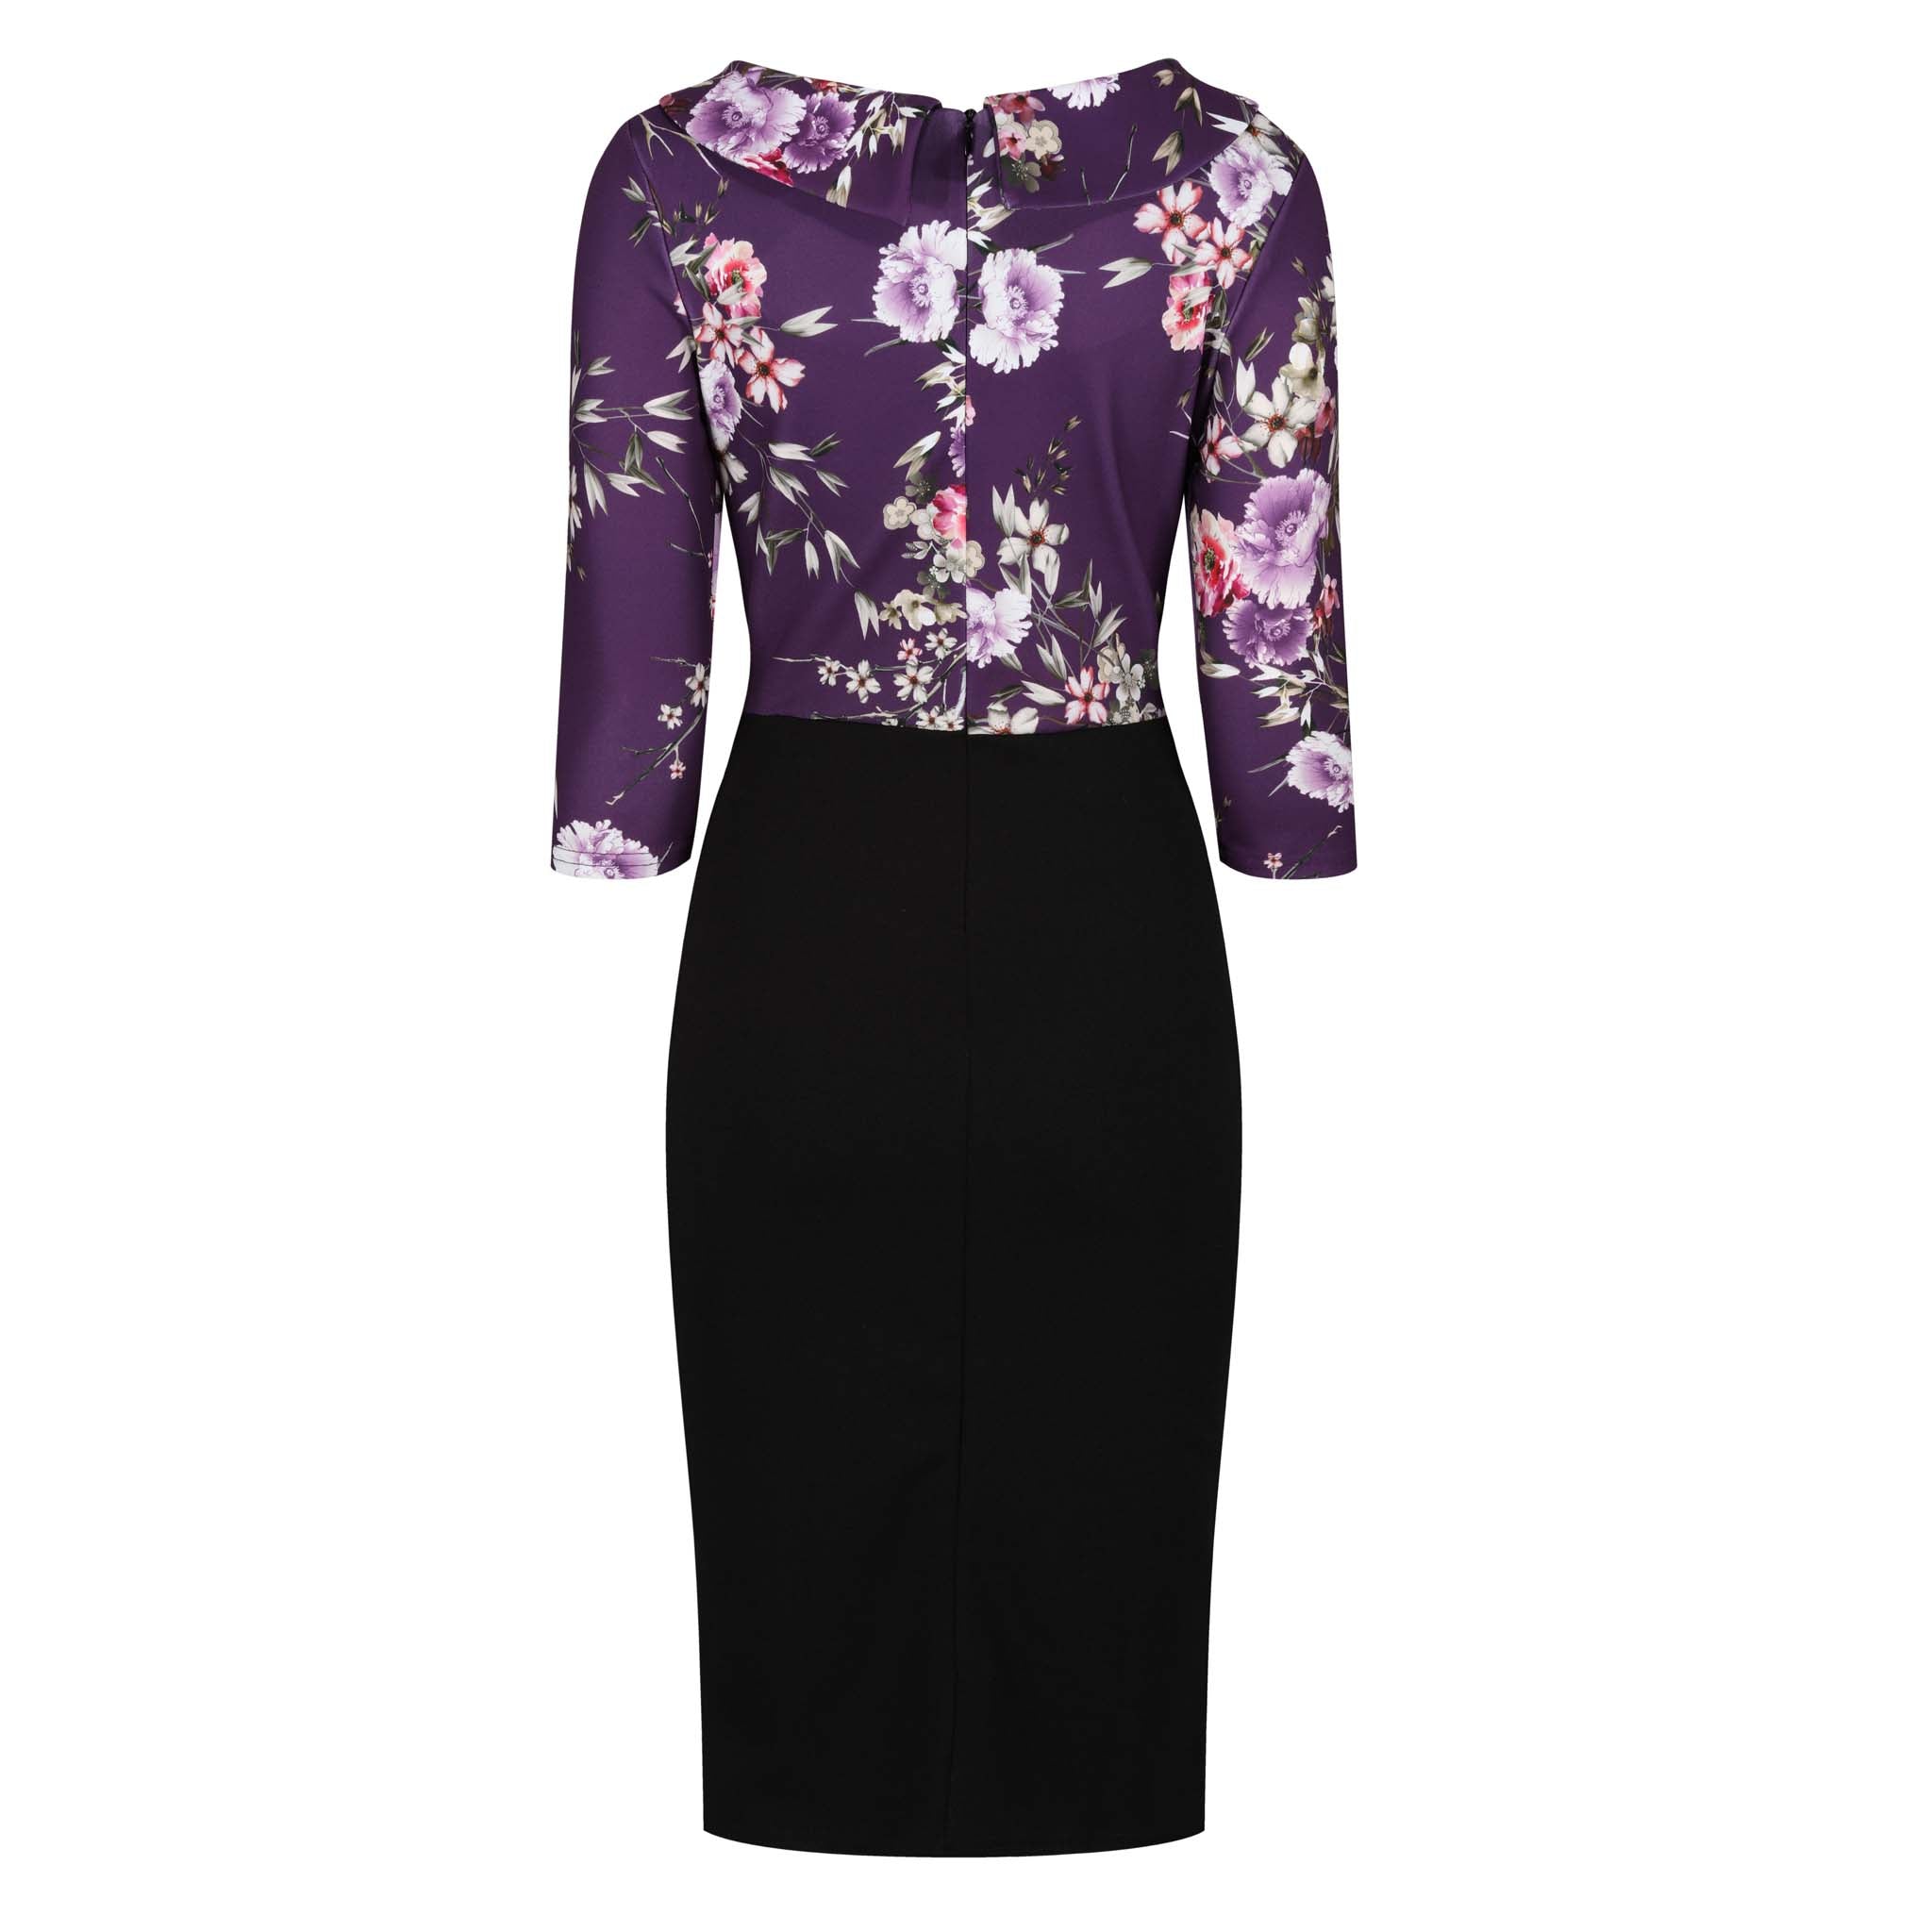 Purple Floral Print Top & Black Skirt 3/4 Sleeve Midi Dress w/ Tie Waist